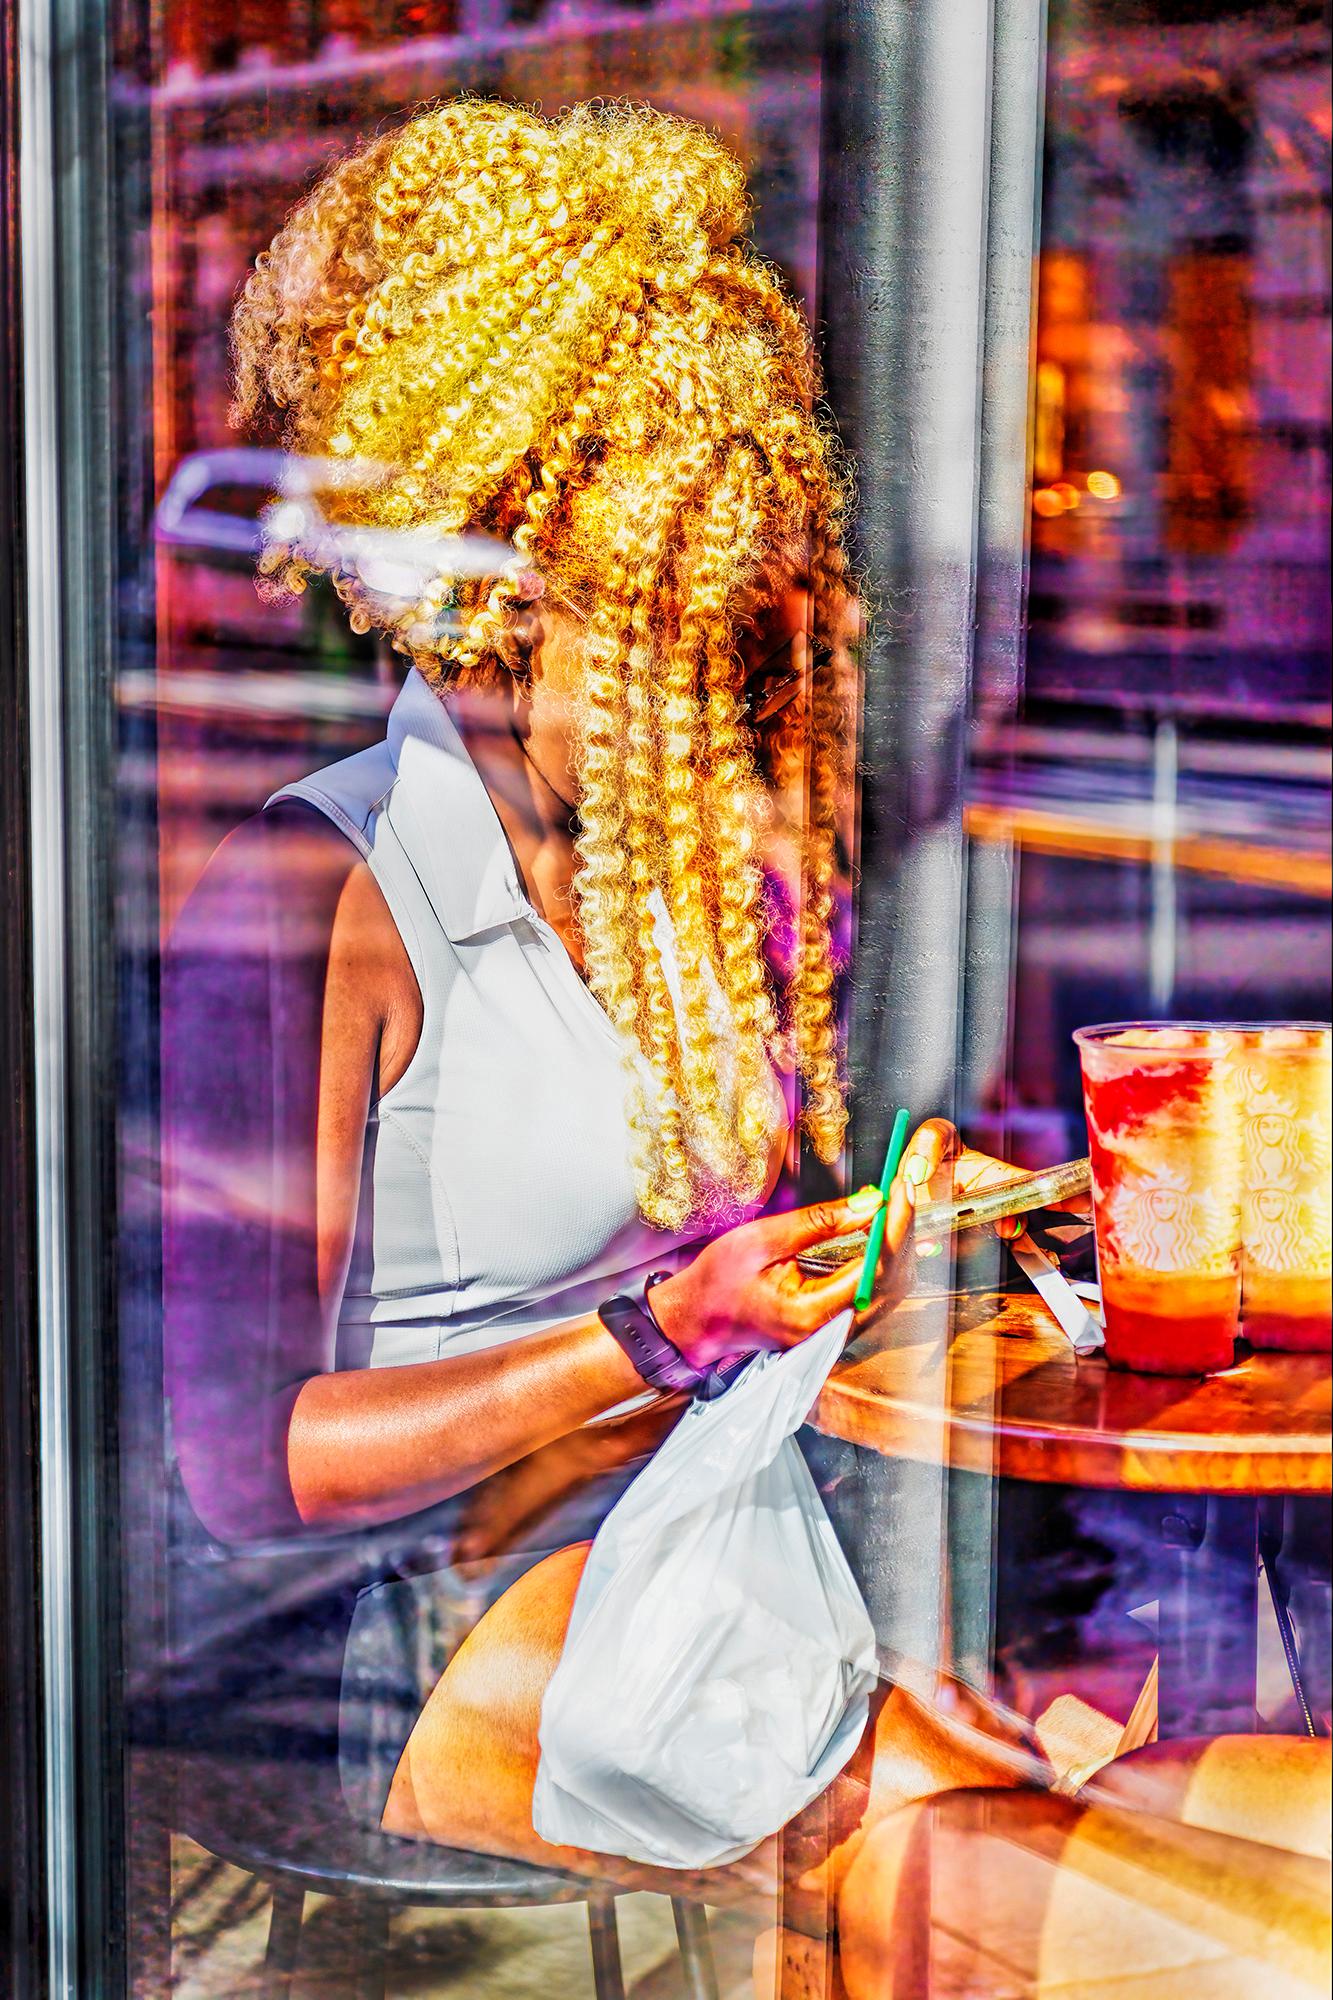 Woman Black with Flamboyant Hair at Cafe